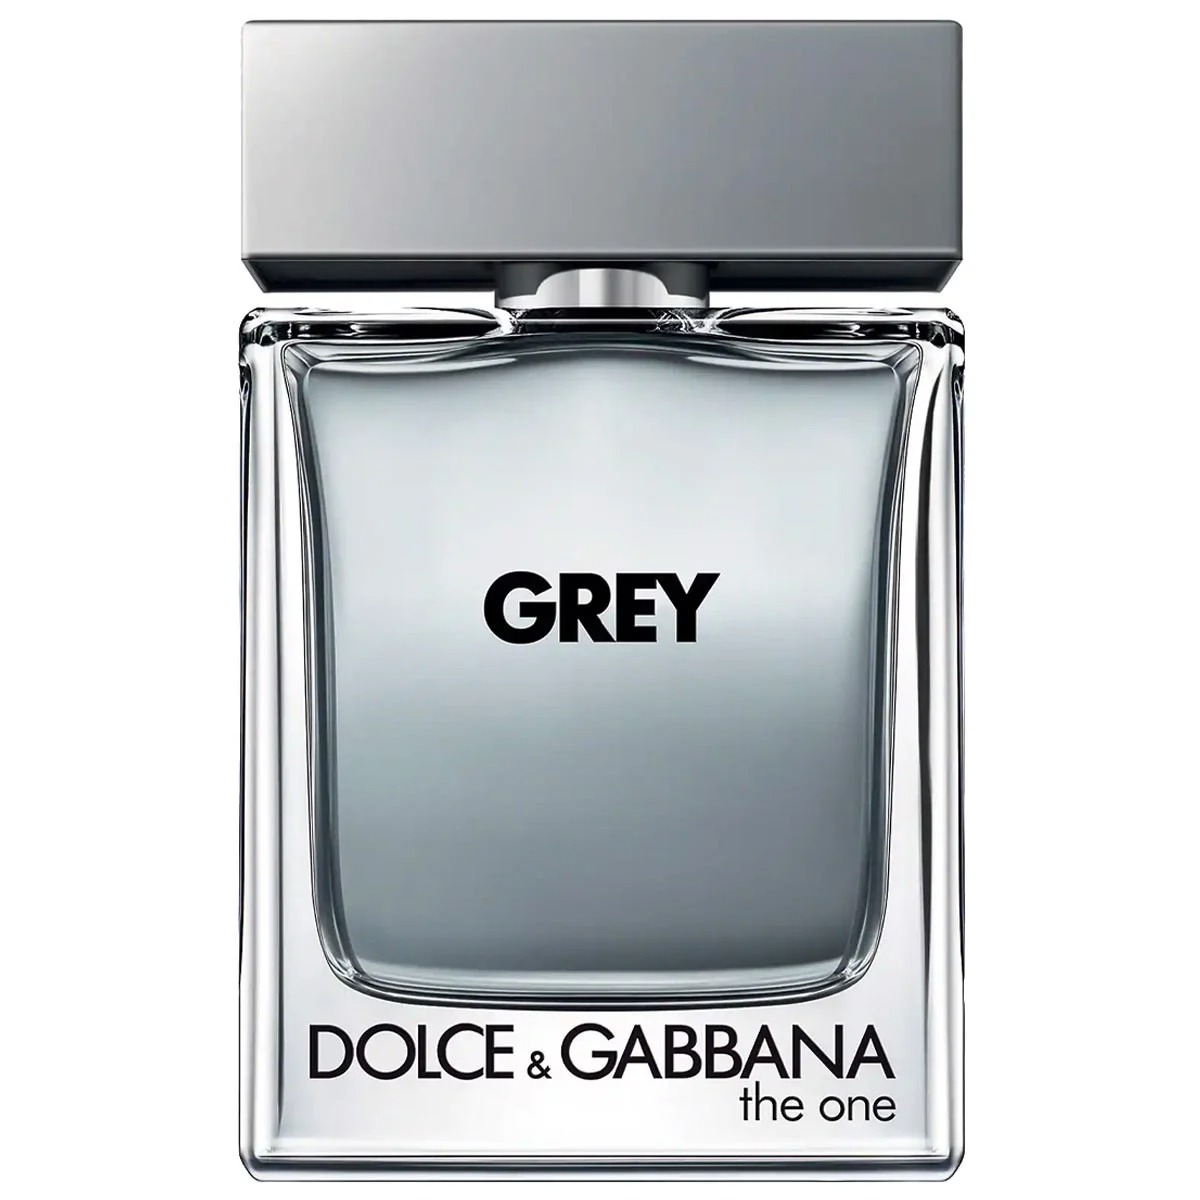 Nước hoa Dolce & Gabbana The One Grey